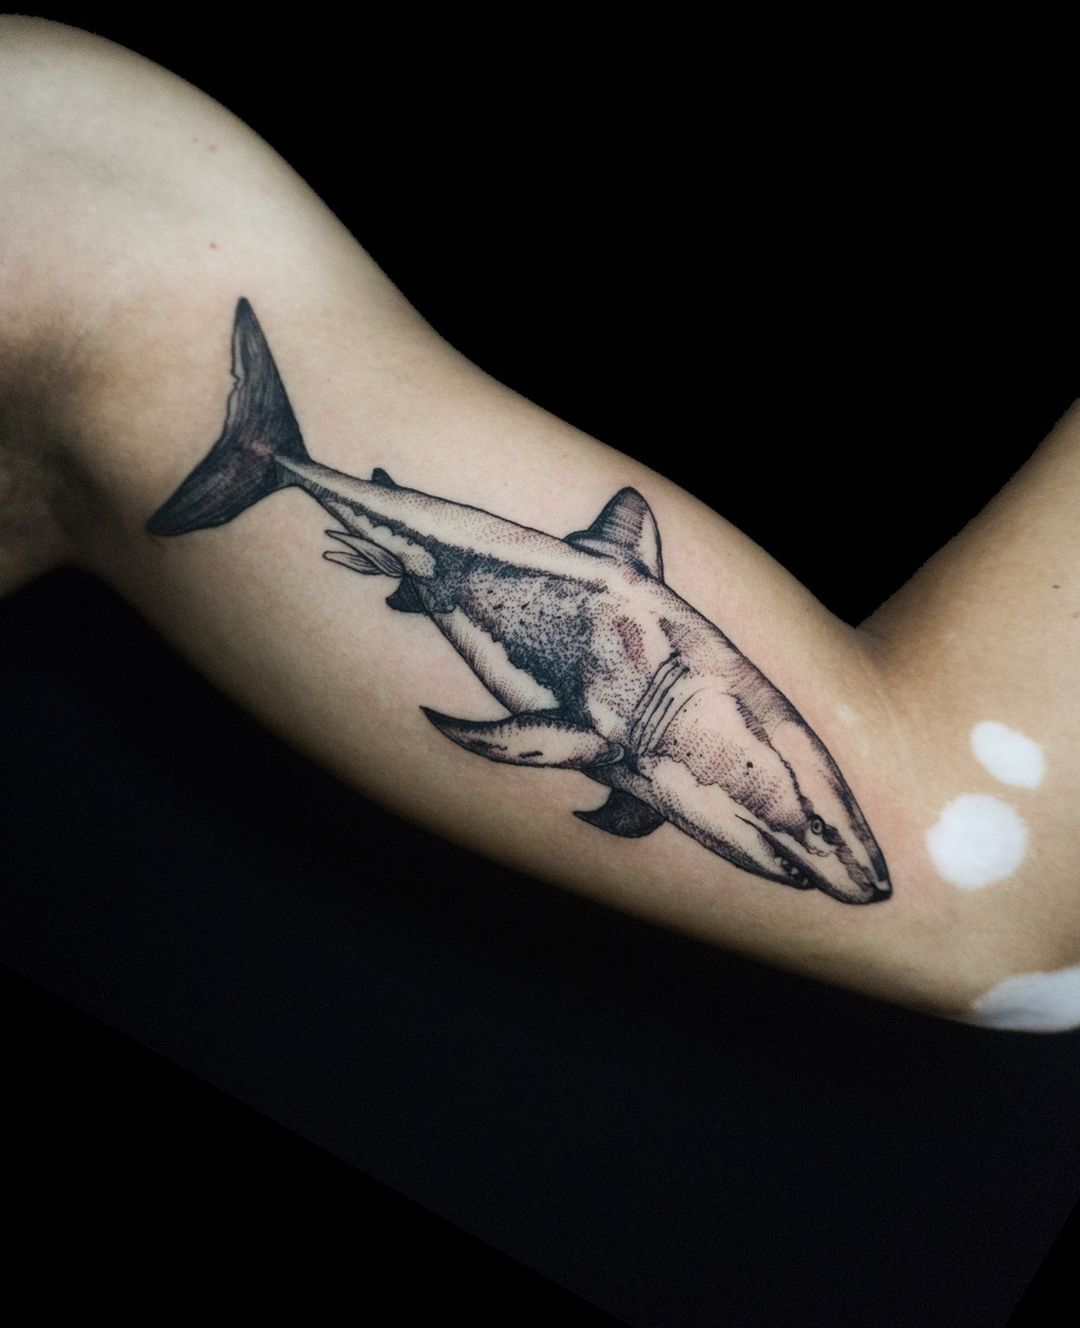 Nurse Shark From Above at Night, Underwater Wildlife Photography Print -  Etsy